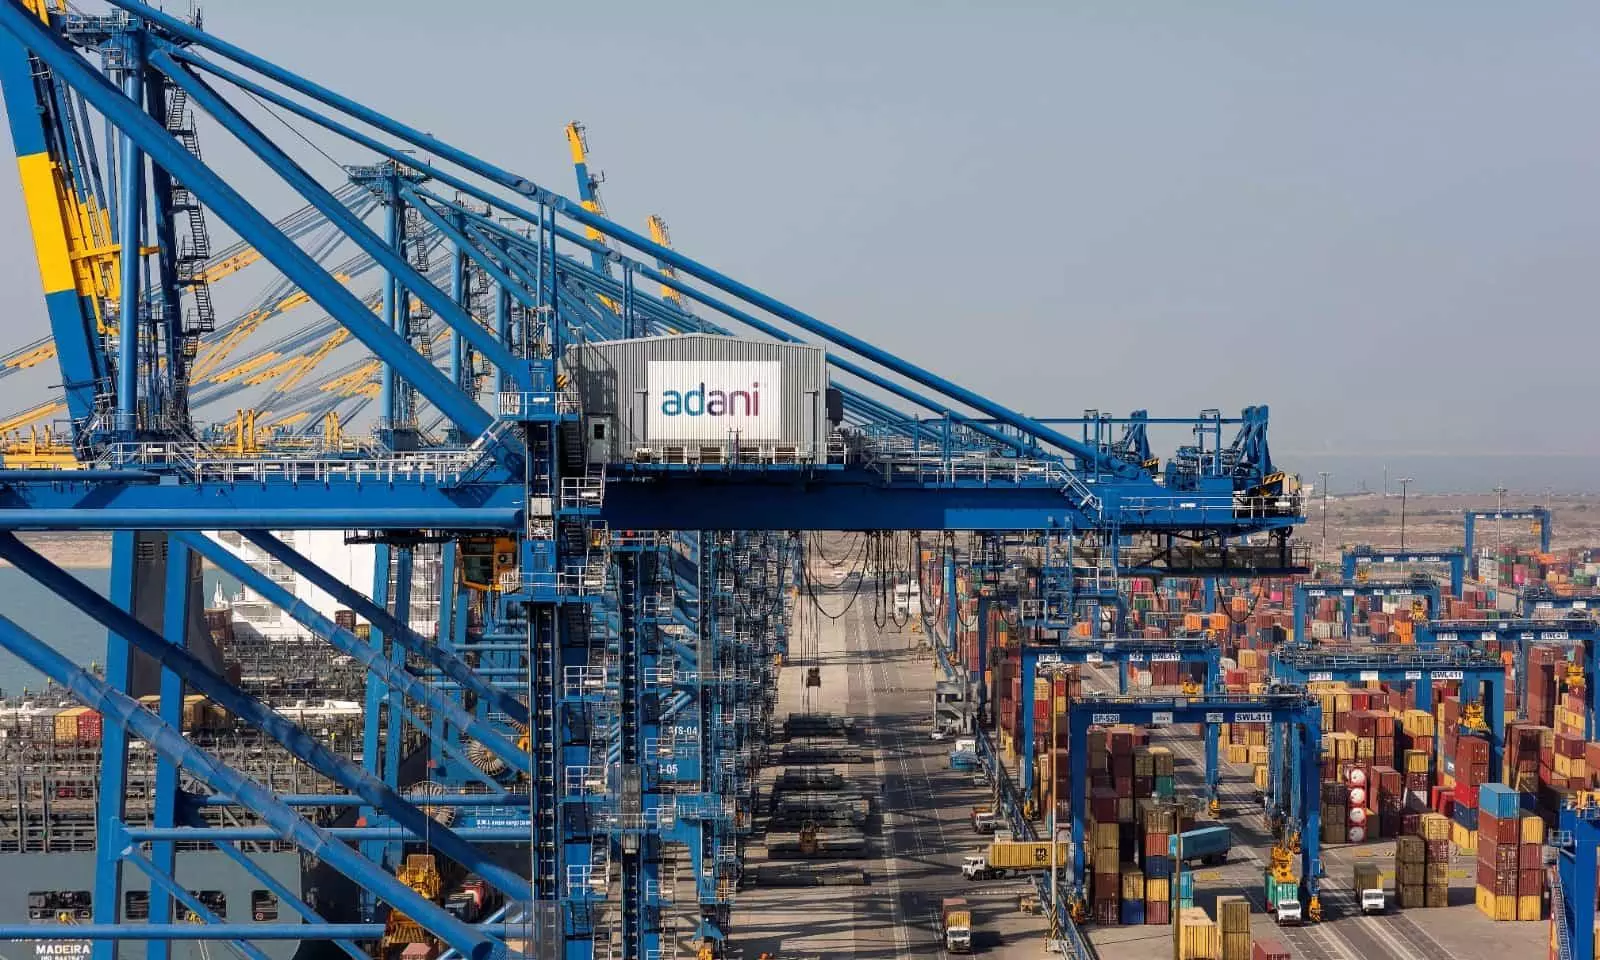 Adani Ports Q3 net profit up 65%